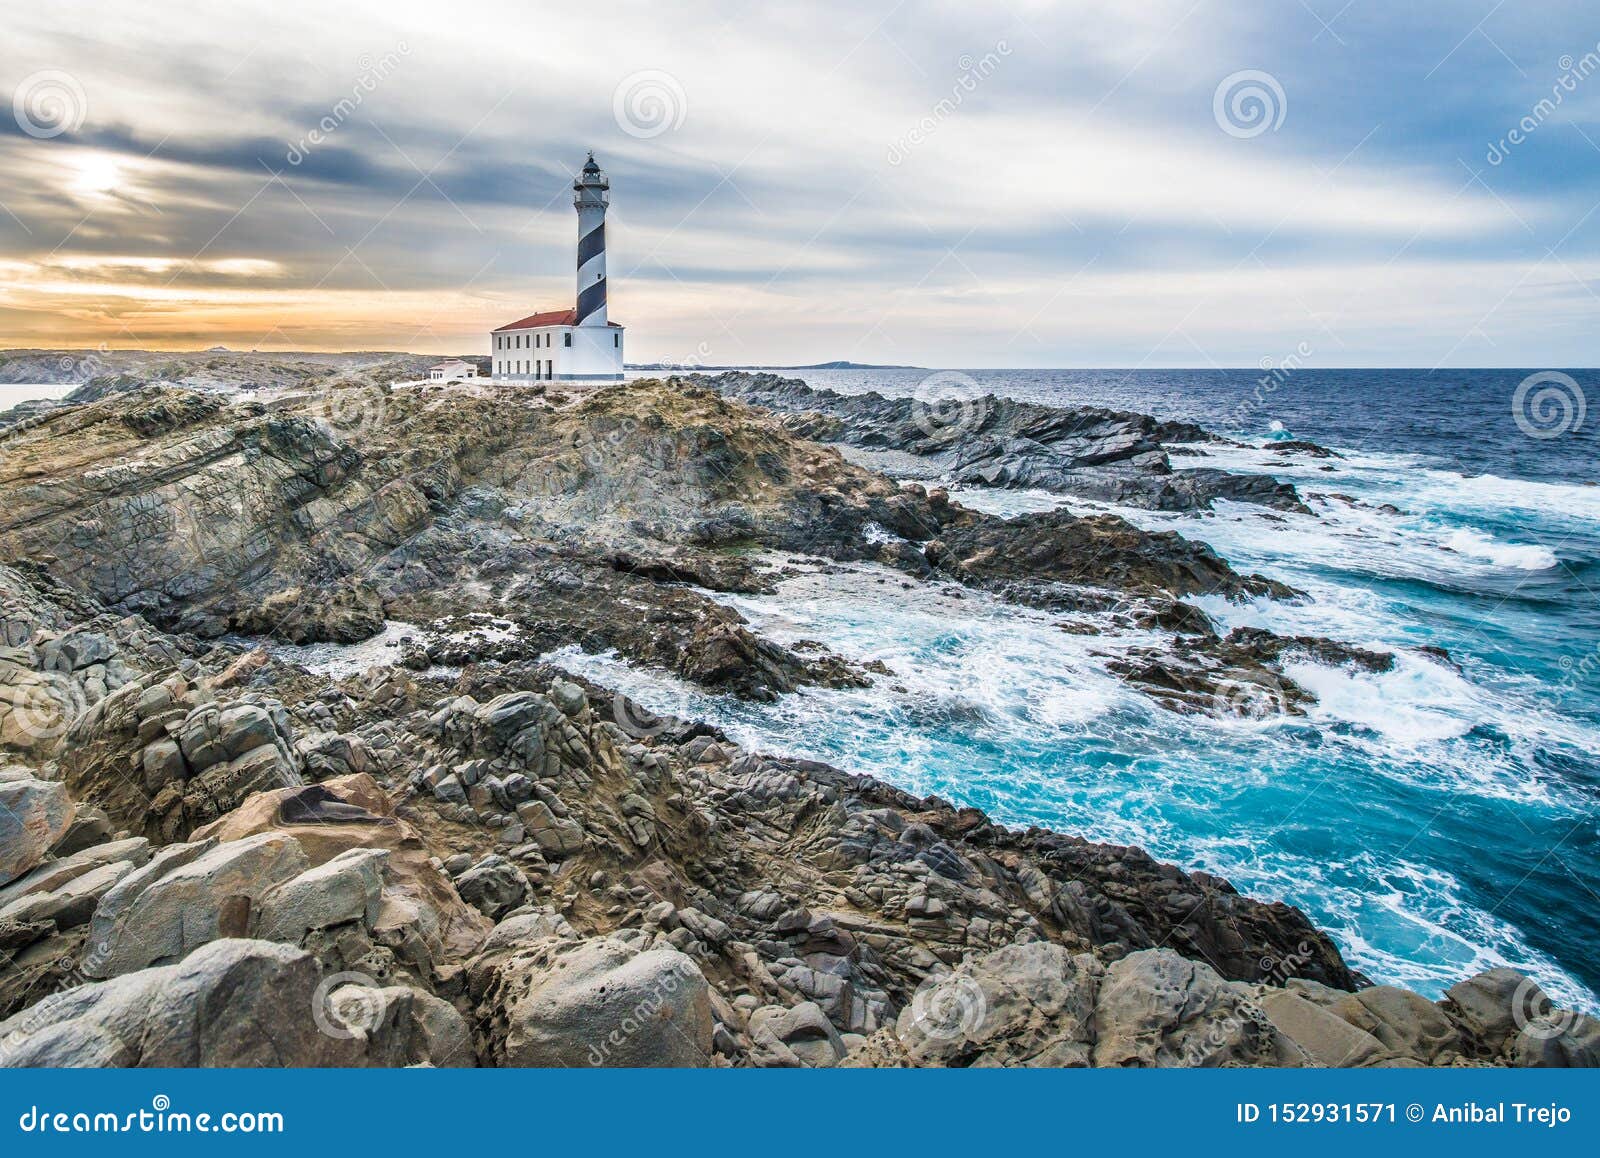 favaritx lighthouse in minorca, spain